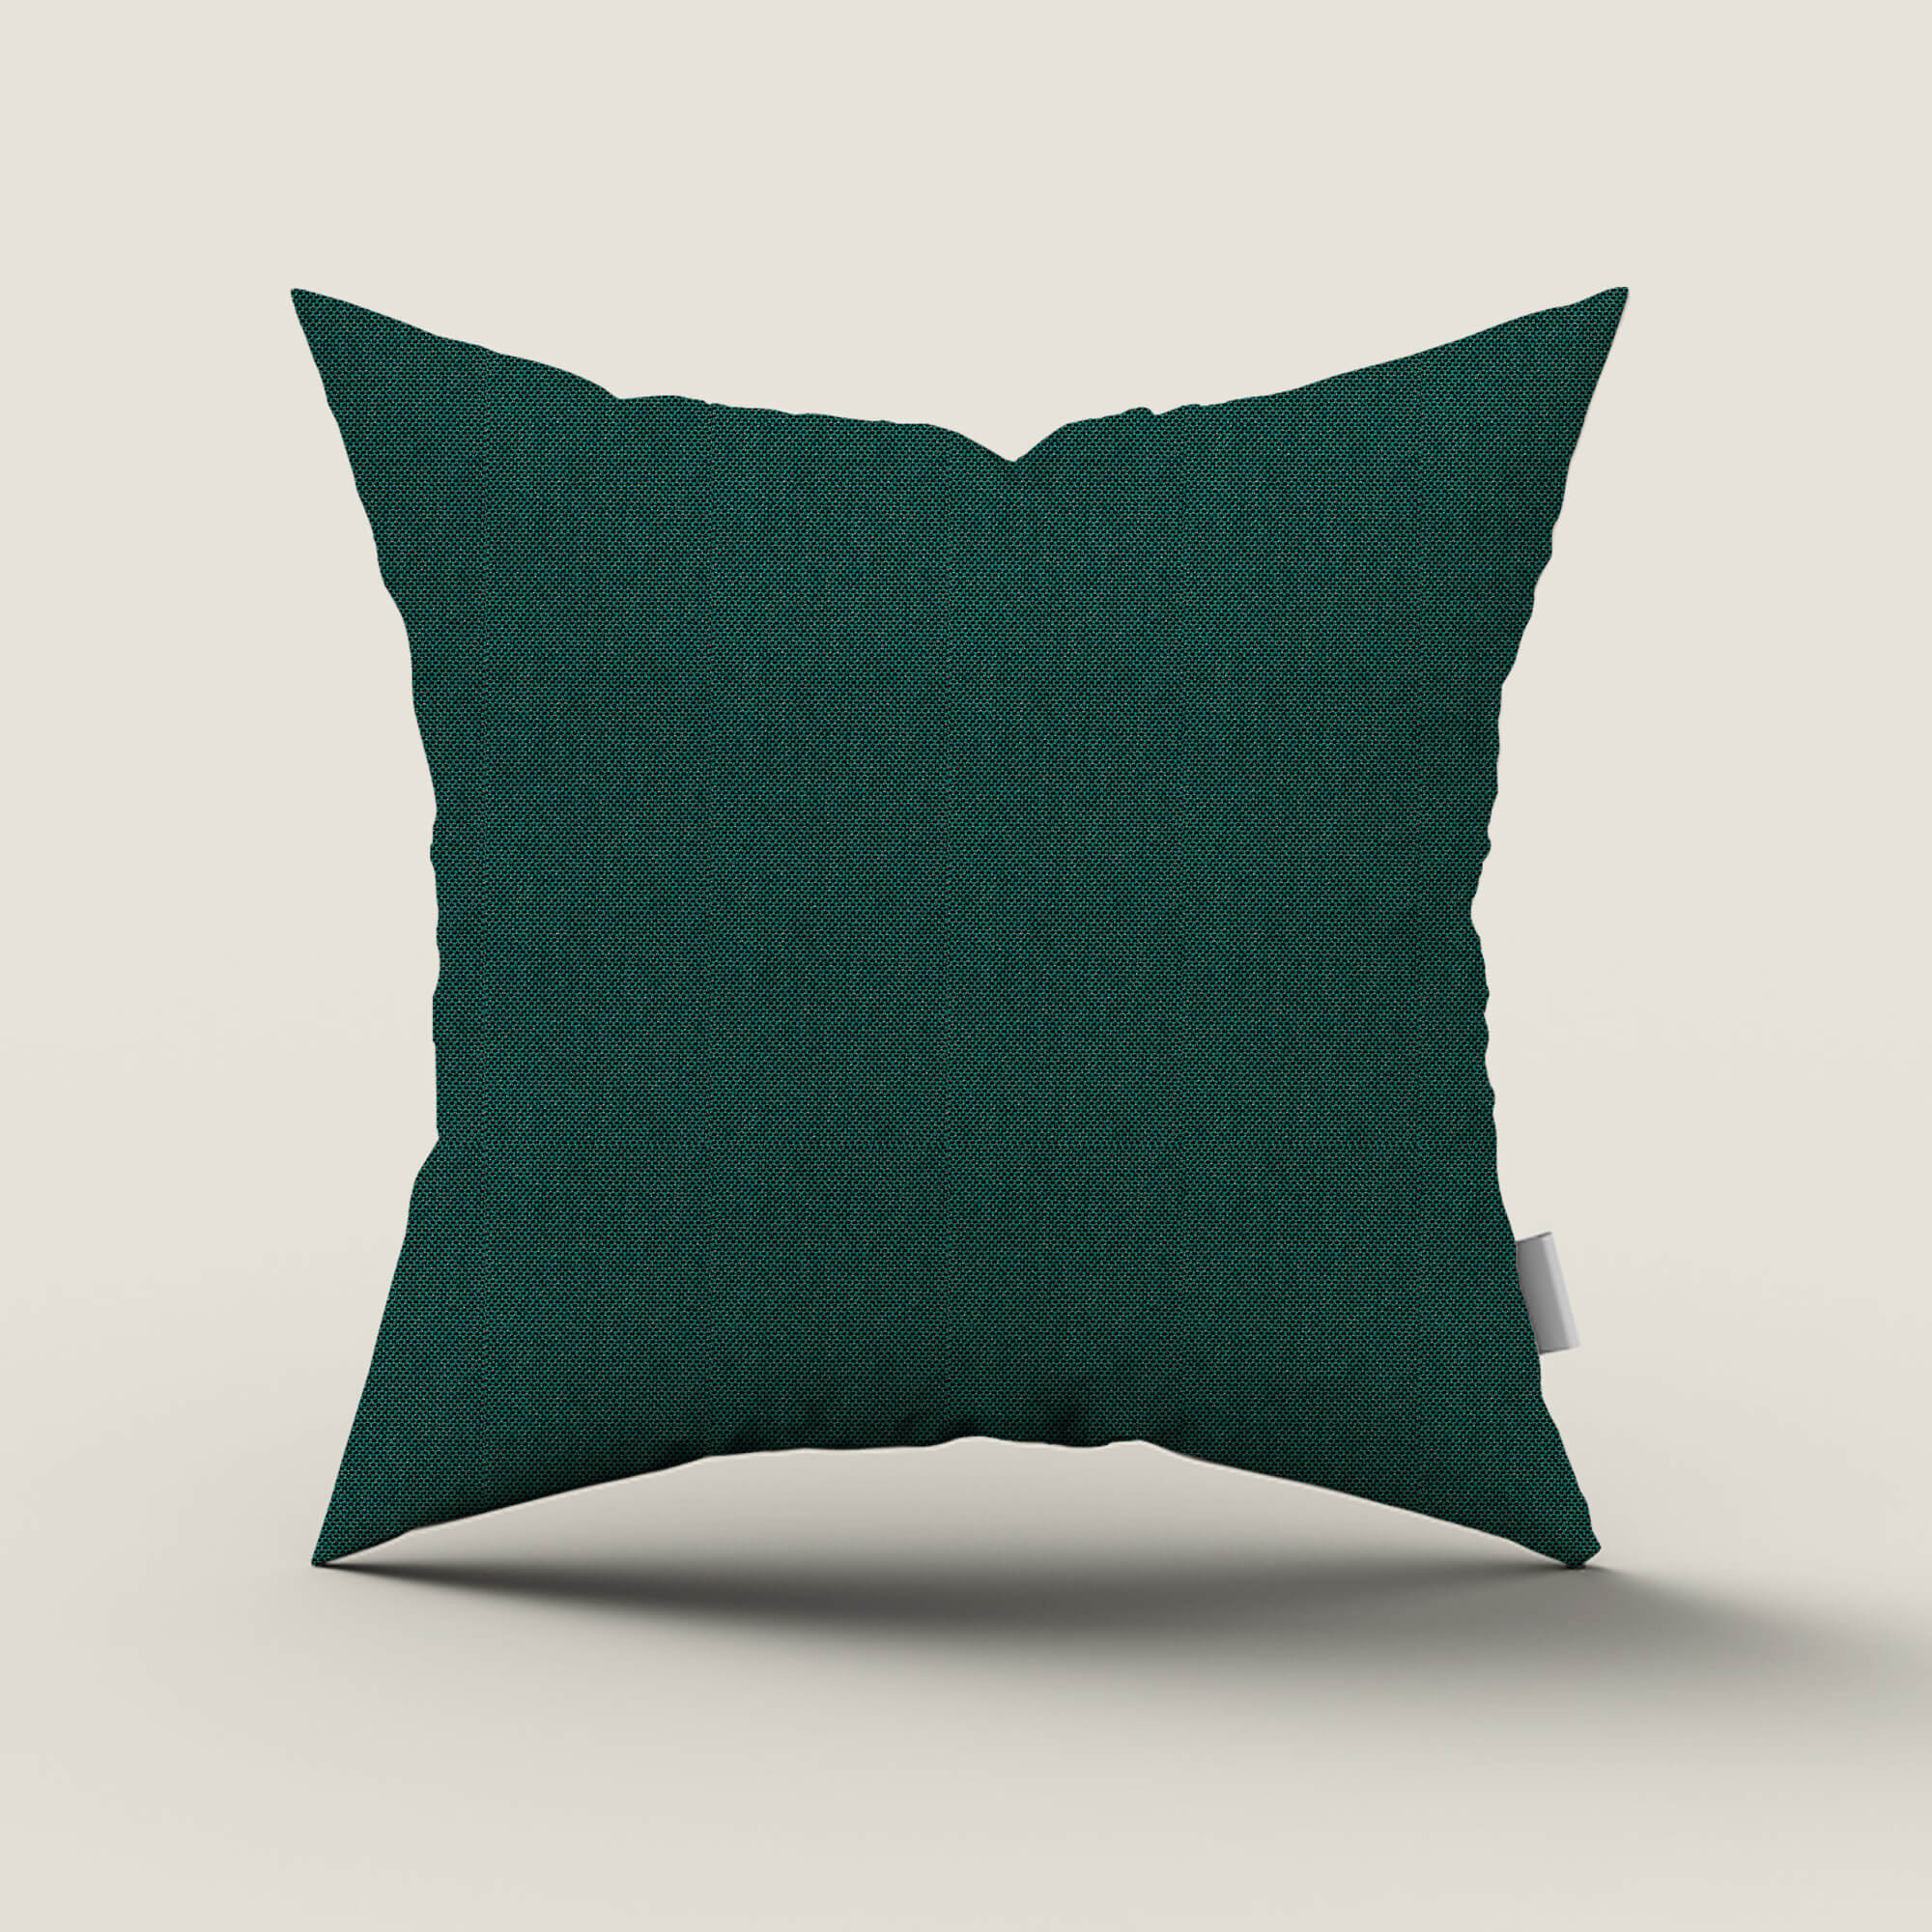 PENGI Waterproof Outdoor Pillow Case 1 Pcs - Sailcloth Evergreen